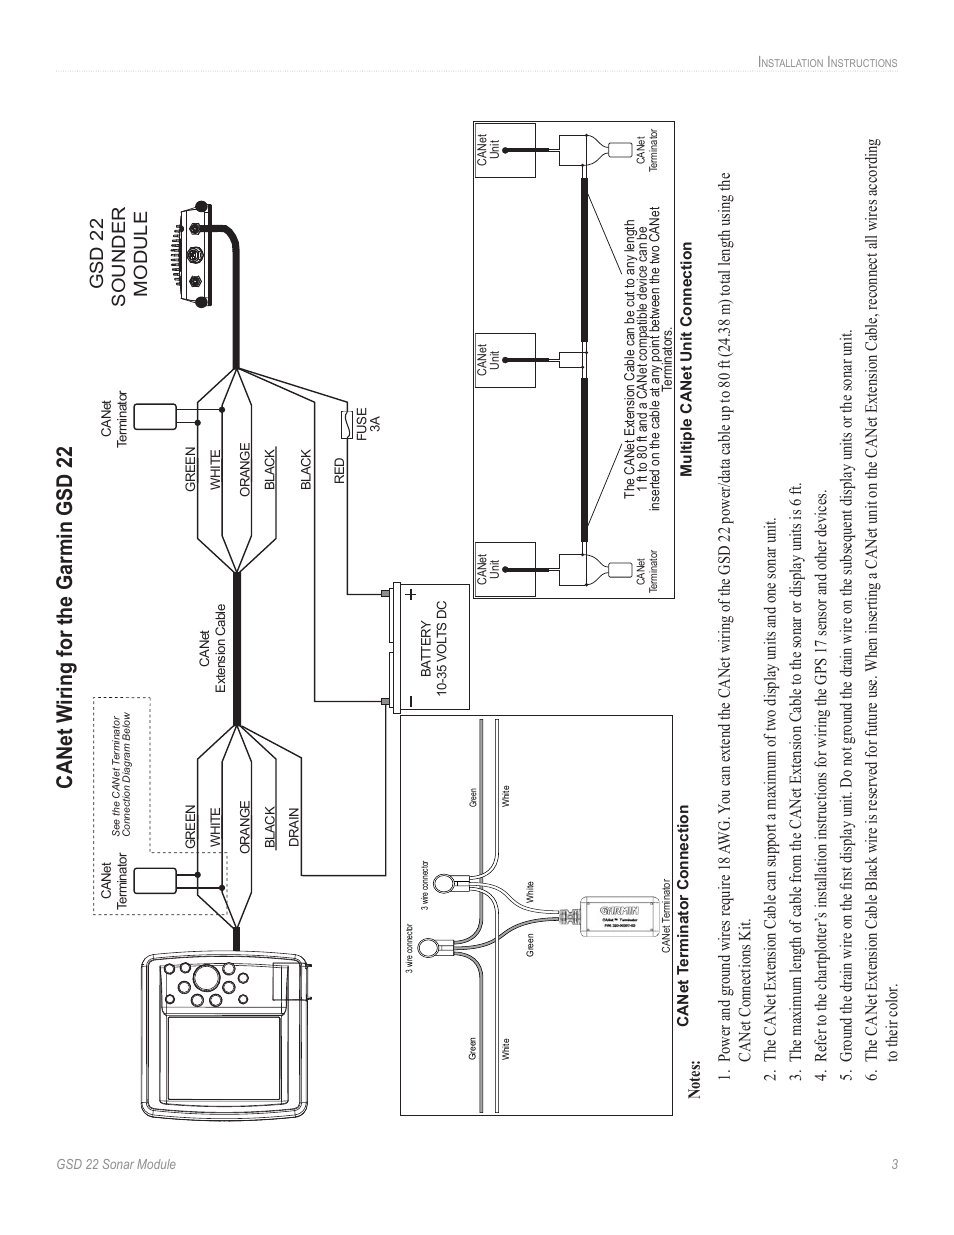 DIAGRAM] Garmin Gsd 22 Wiring Diagram FULL Version HD Quality Wiring Diagram  - ELECTRICCARE.LACOTRIE.FR